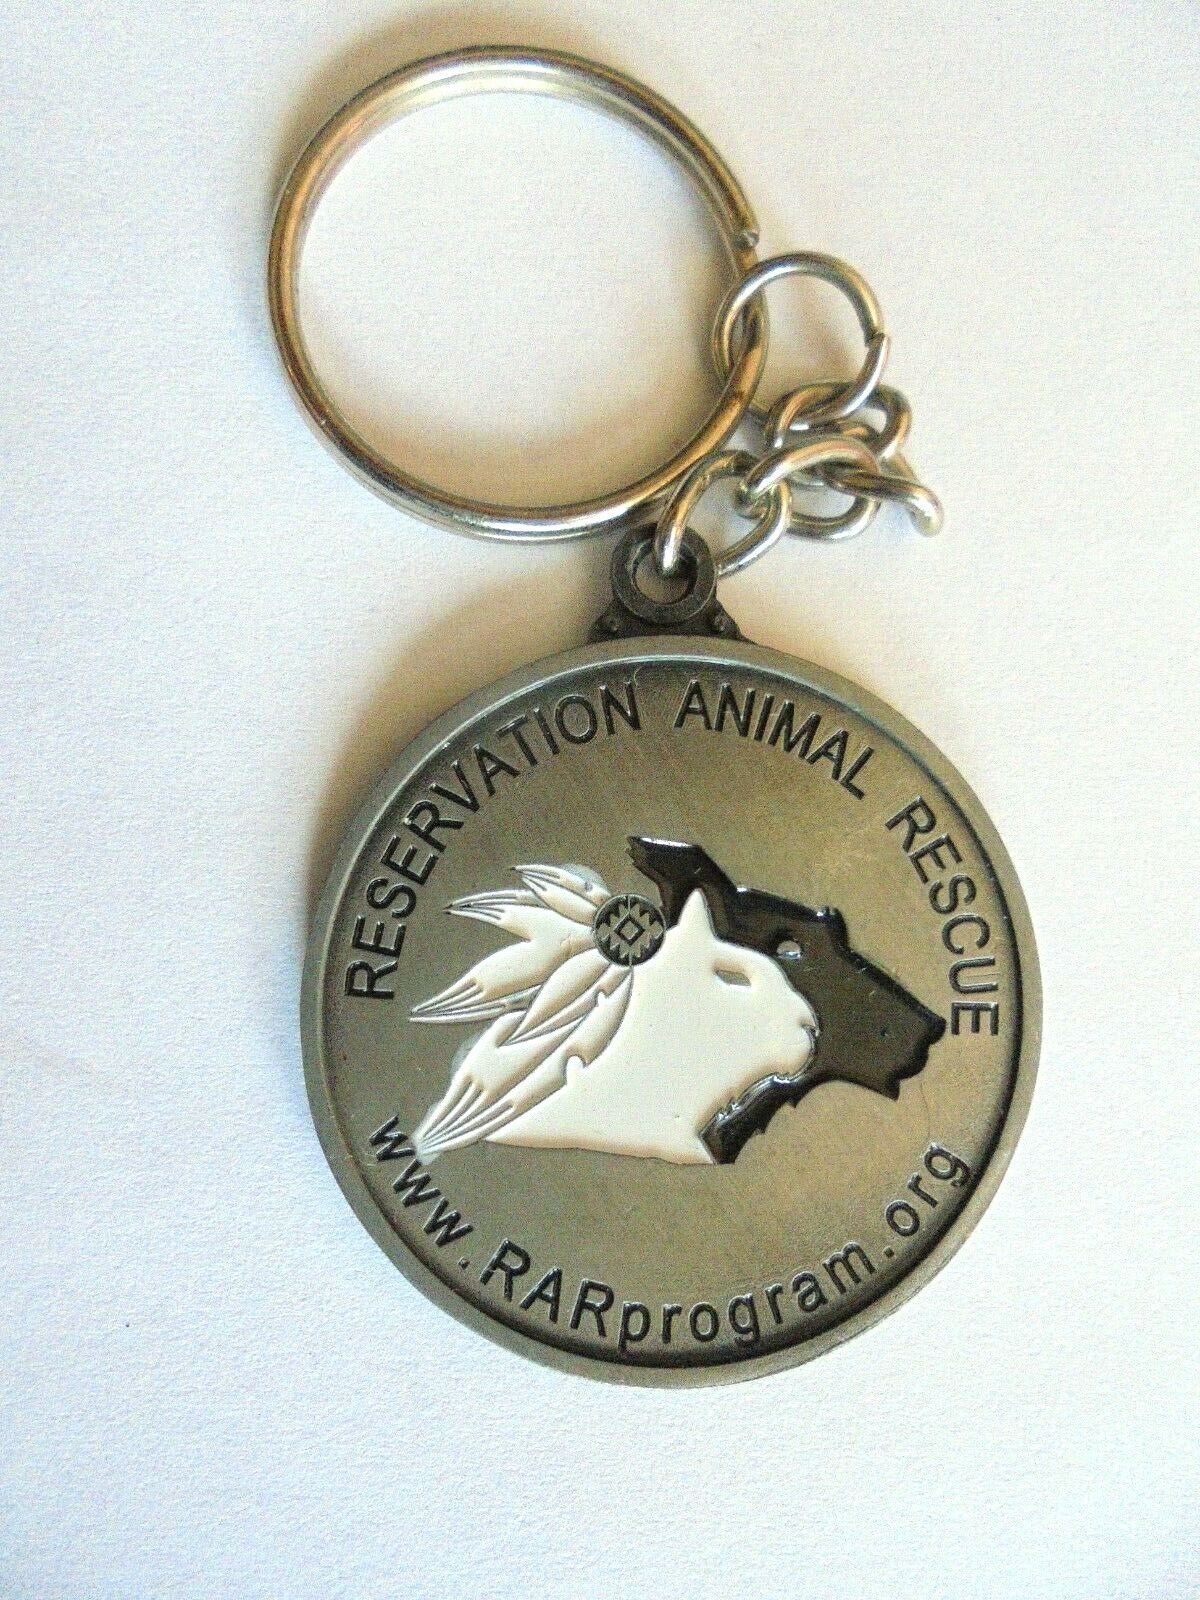 Cool Vintage Reservation Animal Rescue RAR Program Organization Keychain